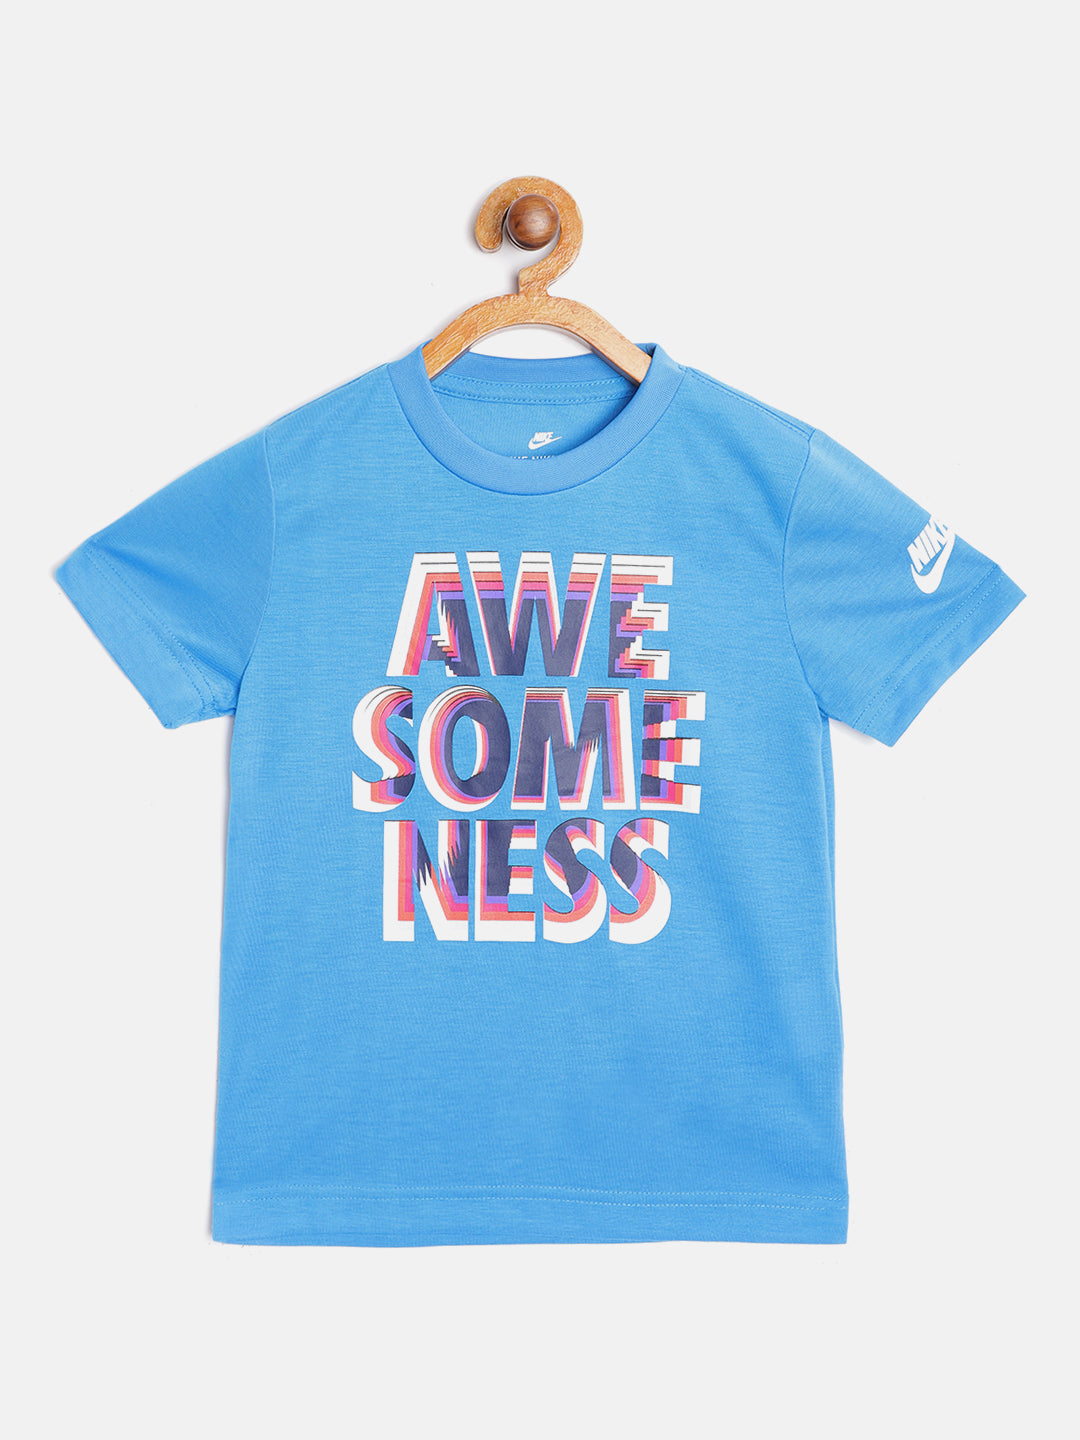 Nike Awesomeness T-Shirt T Shirt Nike   